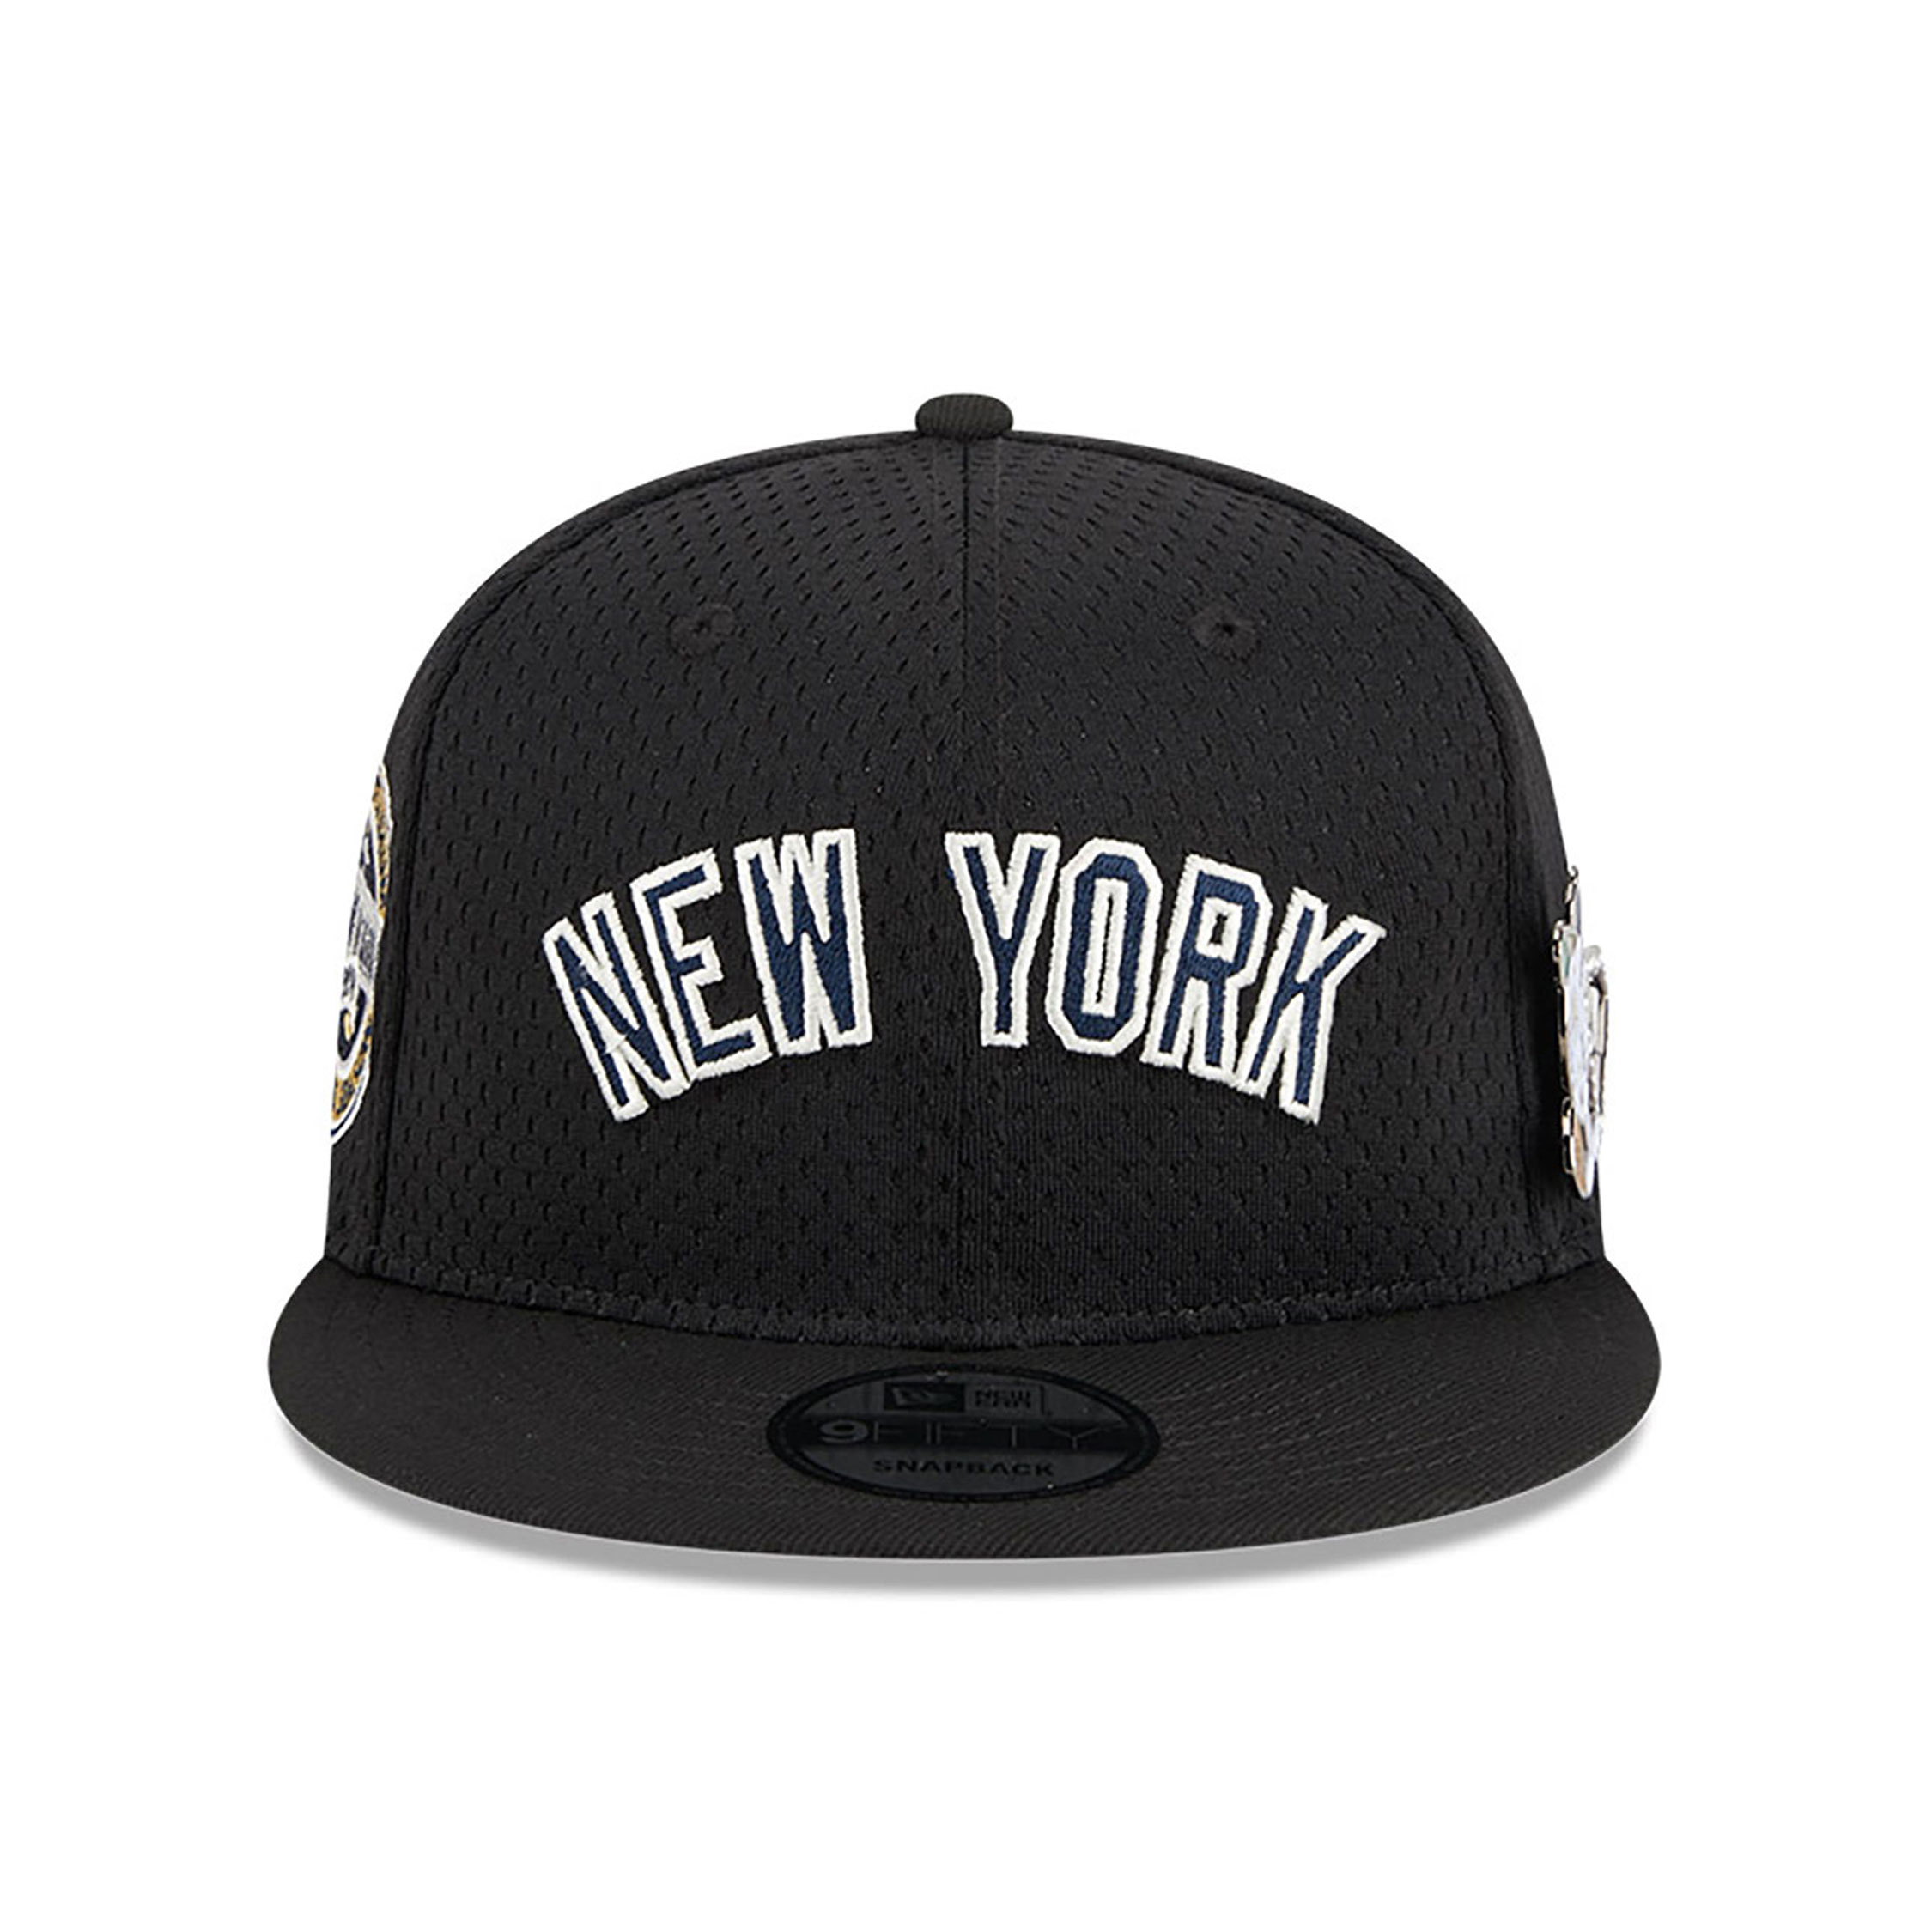 New York Yankees Post-Up Pin Black 9FIFTY Cap